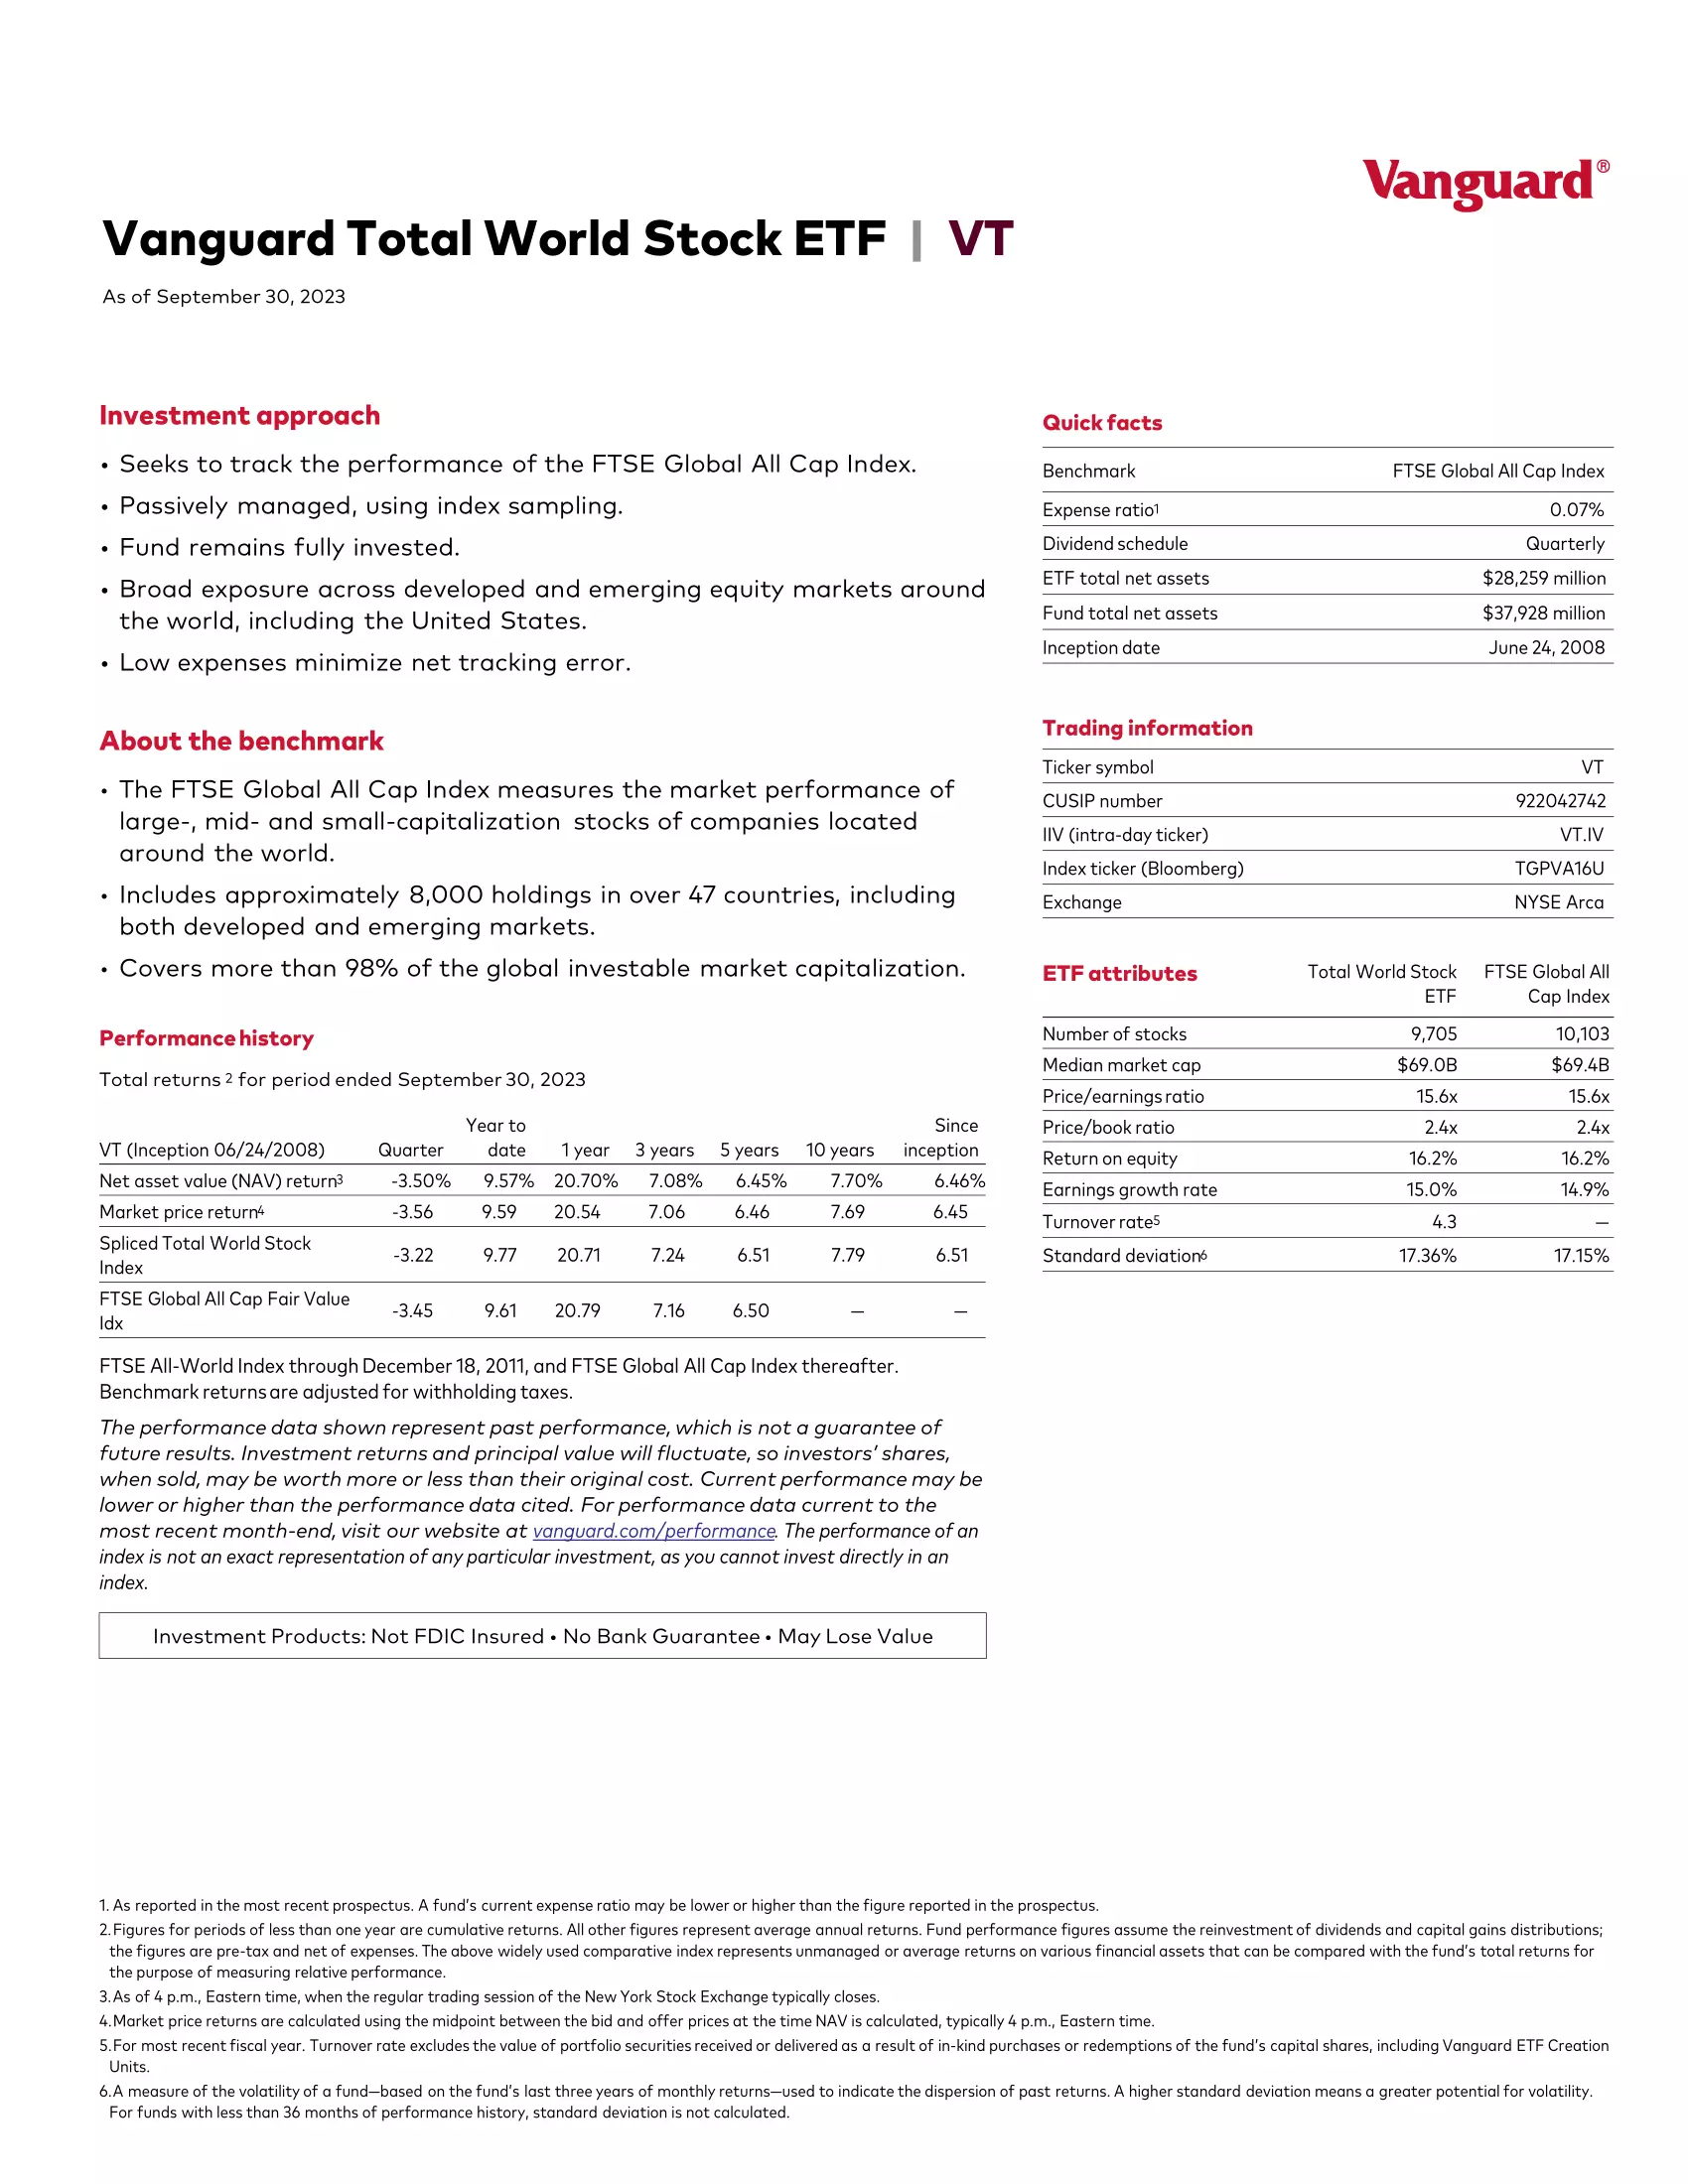 VT: Vanguard Total World Stock Index Fund